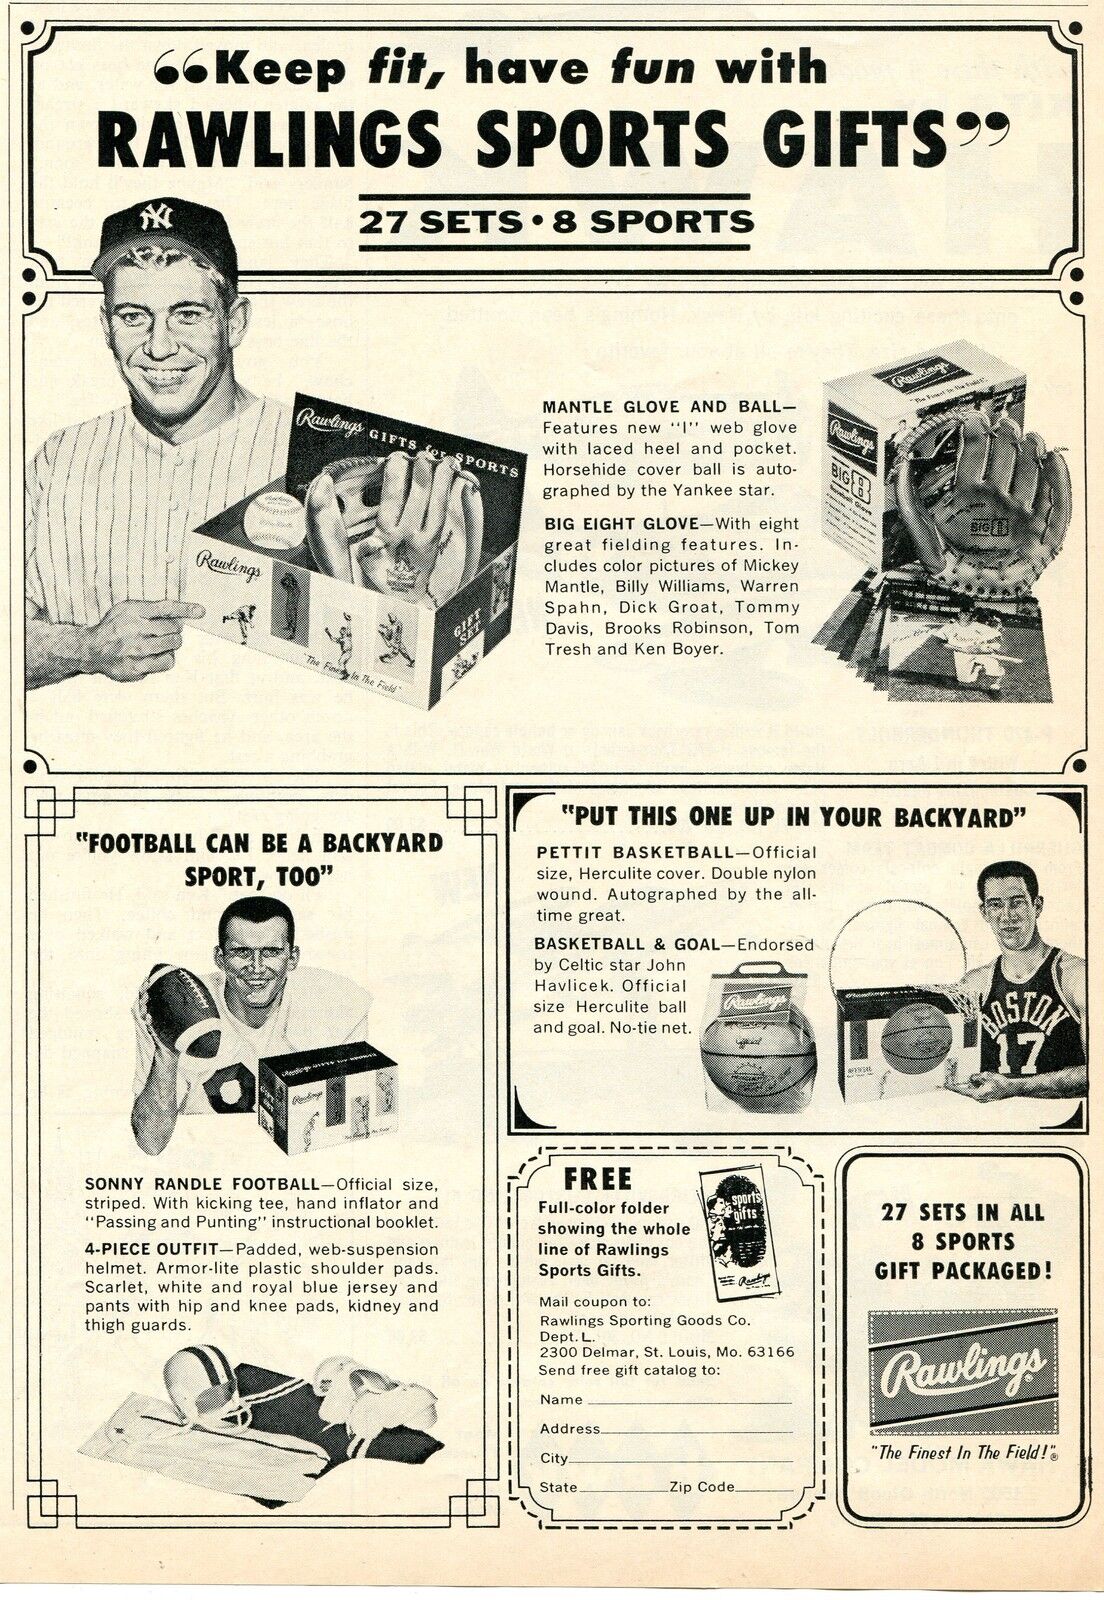 1964 Print Ad Rawlings Sport Gifts w Mickey Mantle, Sonny Randle, John Havlicek